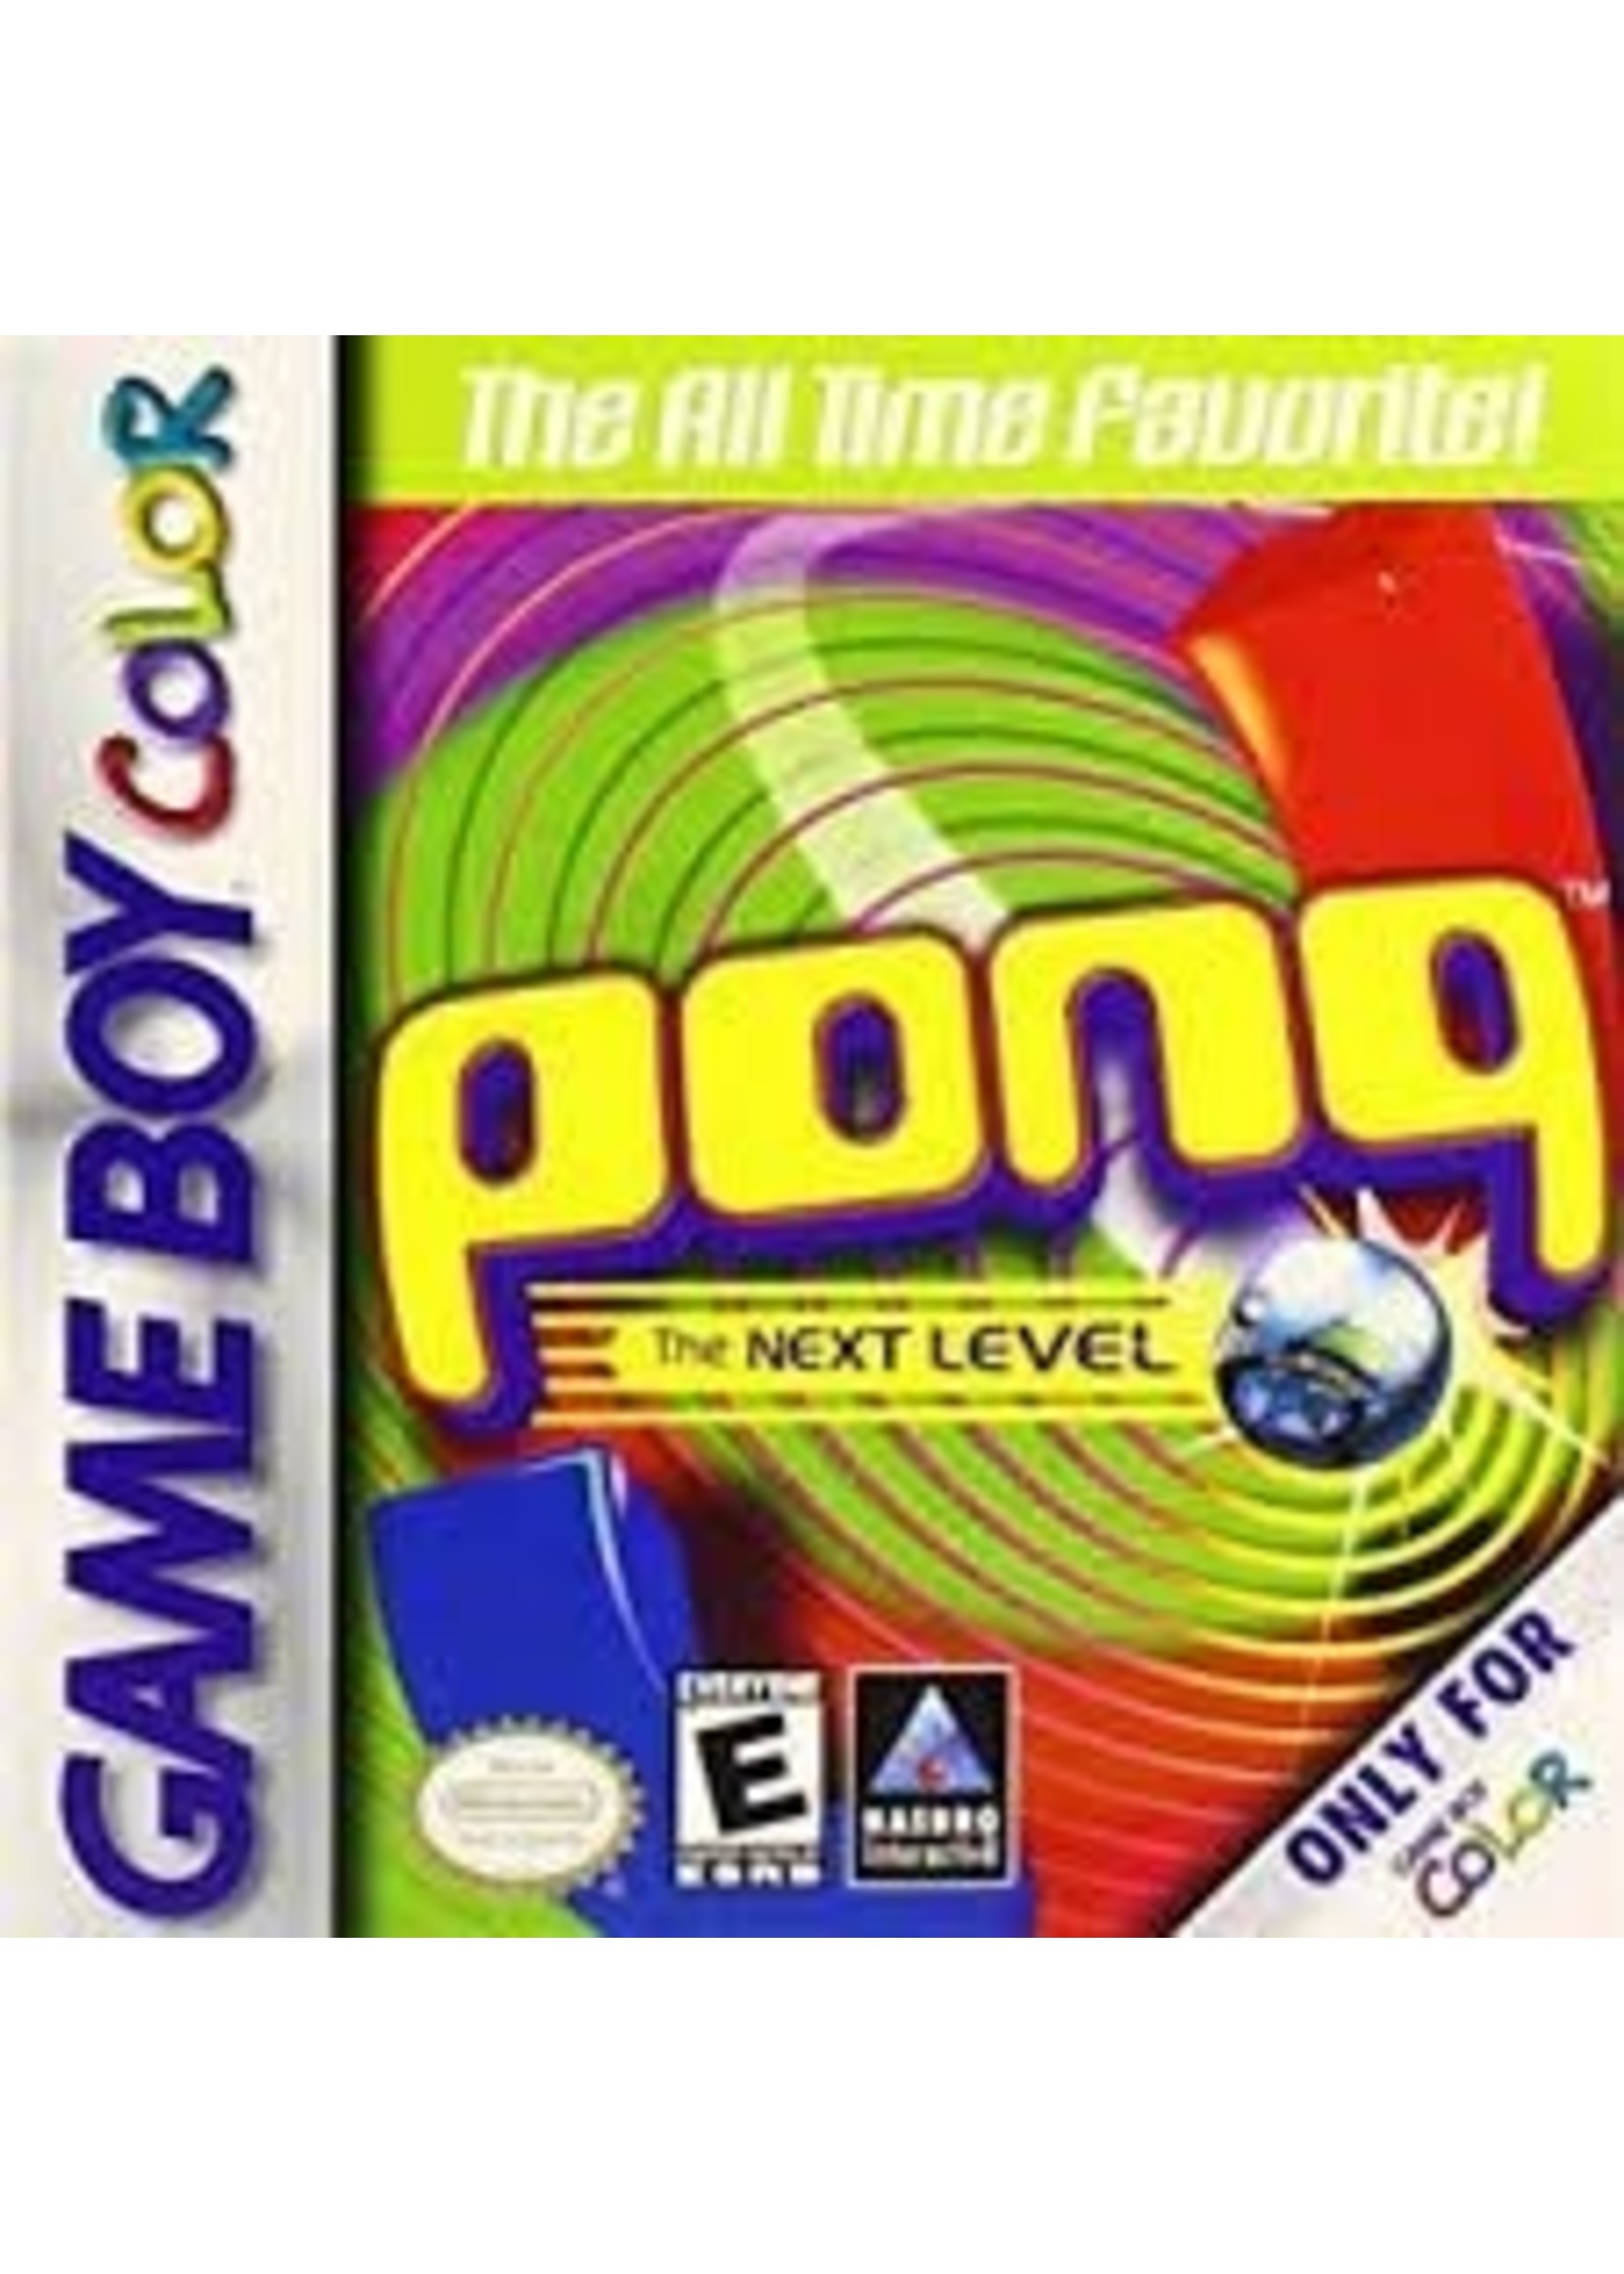 Nintendo Gameboy Color Pong The Next Level